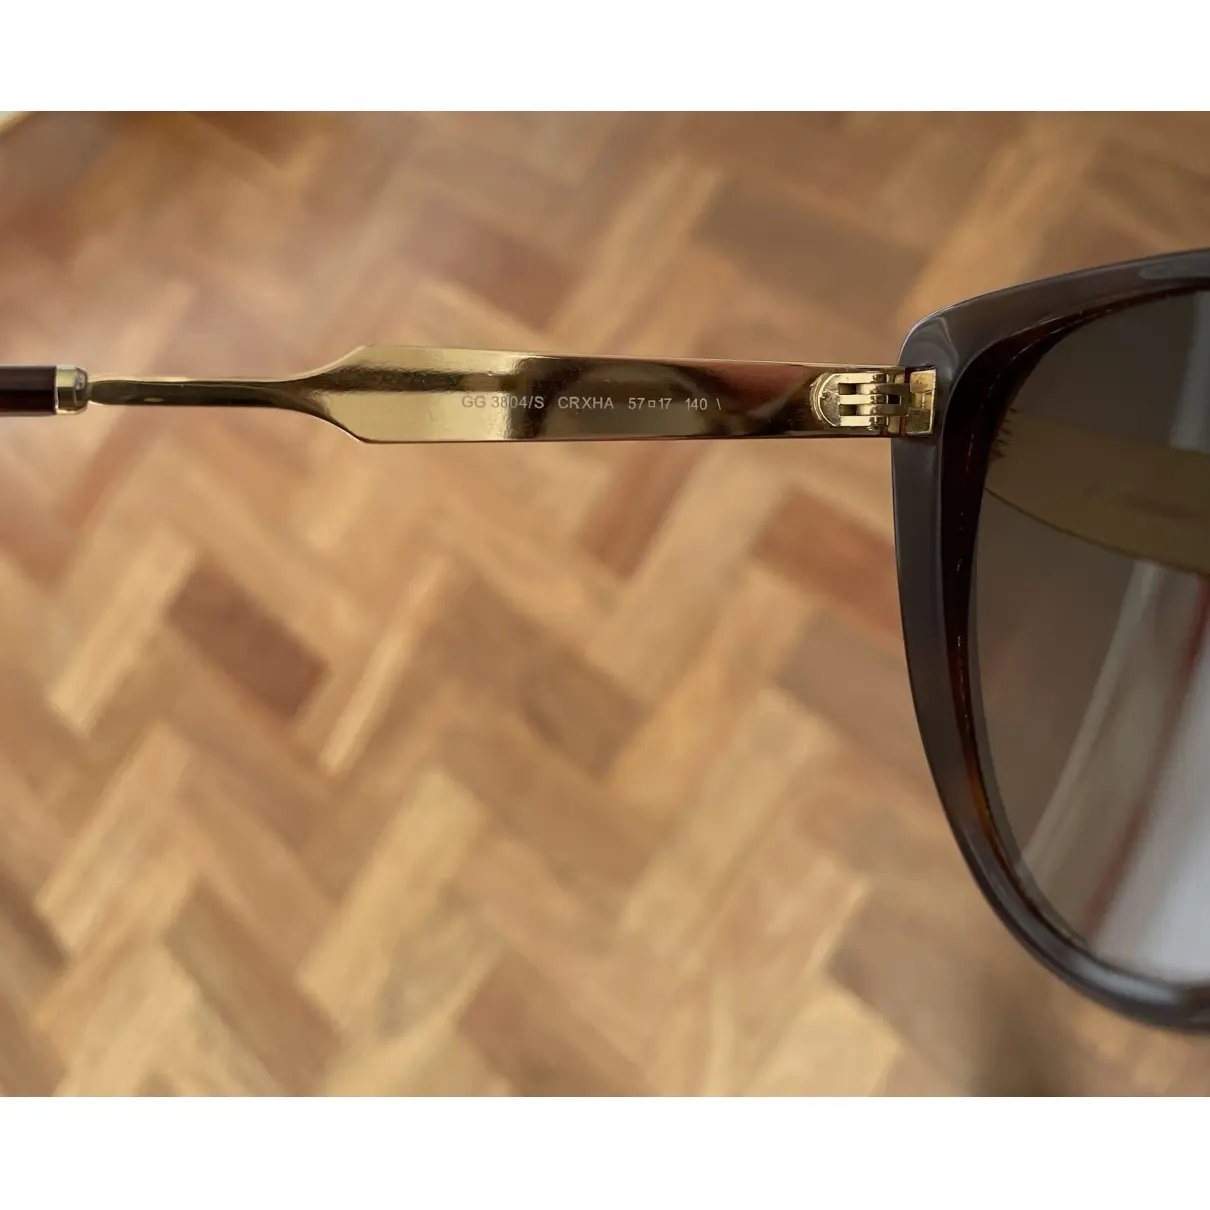 Luxury Gucci Sunglasses Women